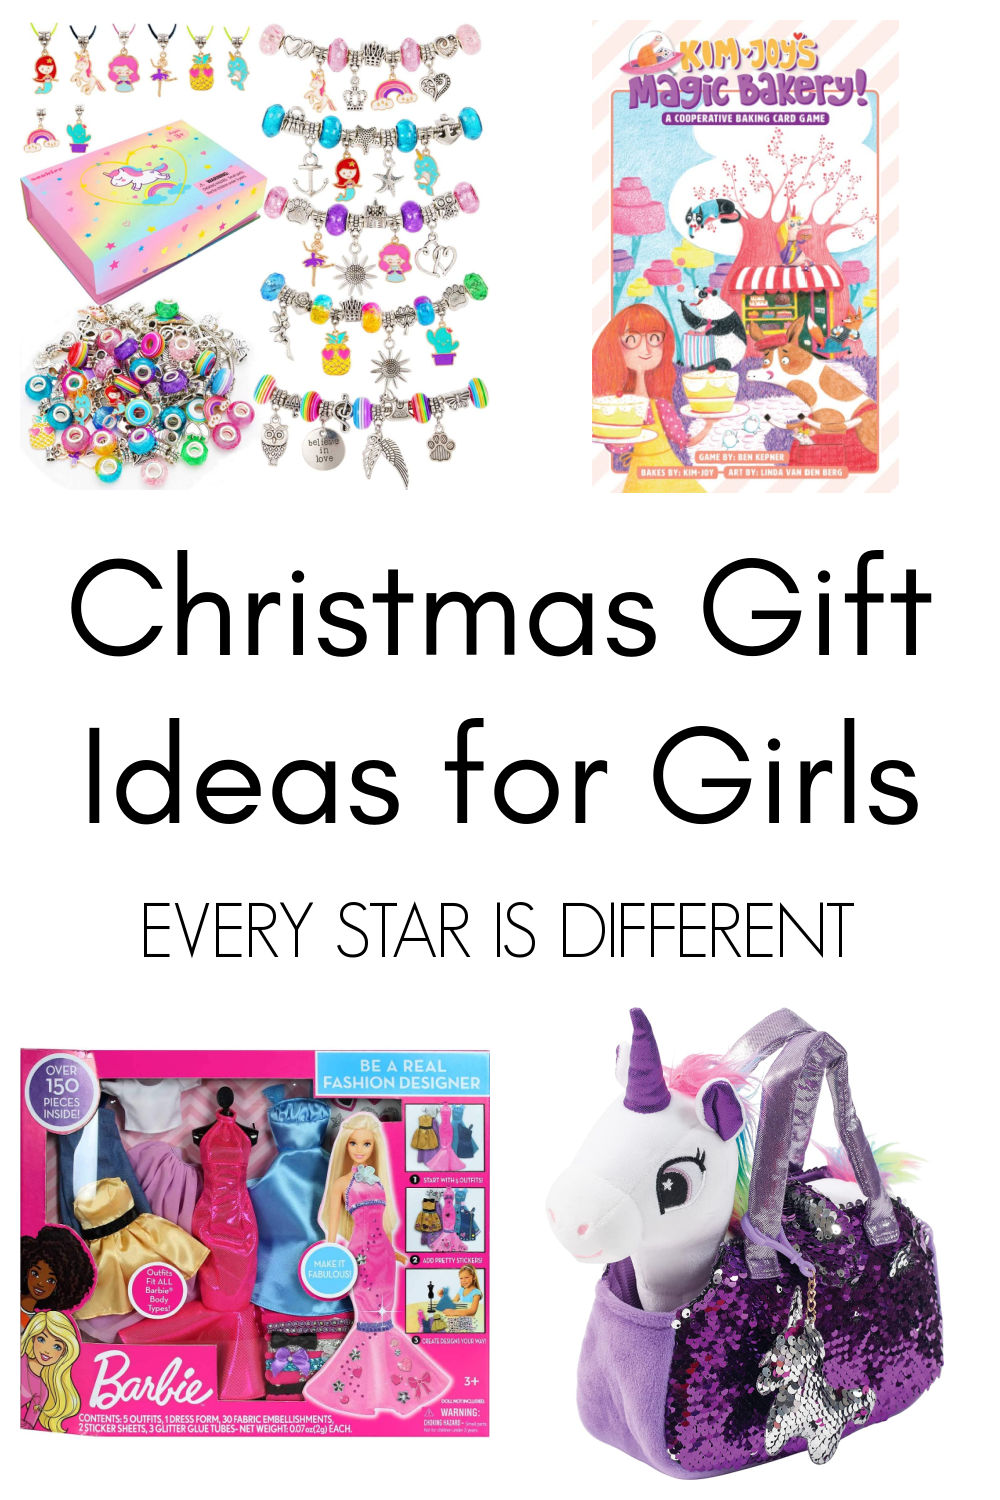 Ganda mo, girl! Gift ideas for your maarte, kikay friends this Christmas